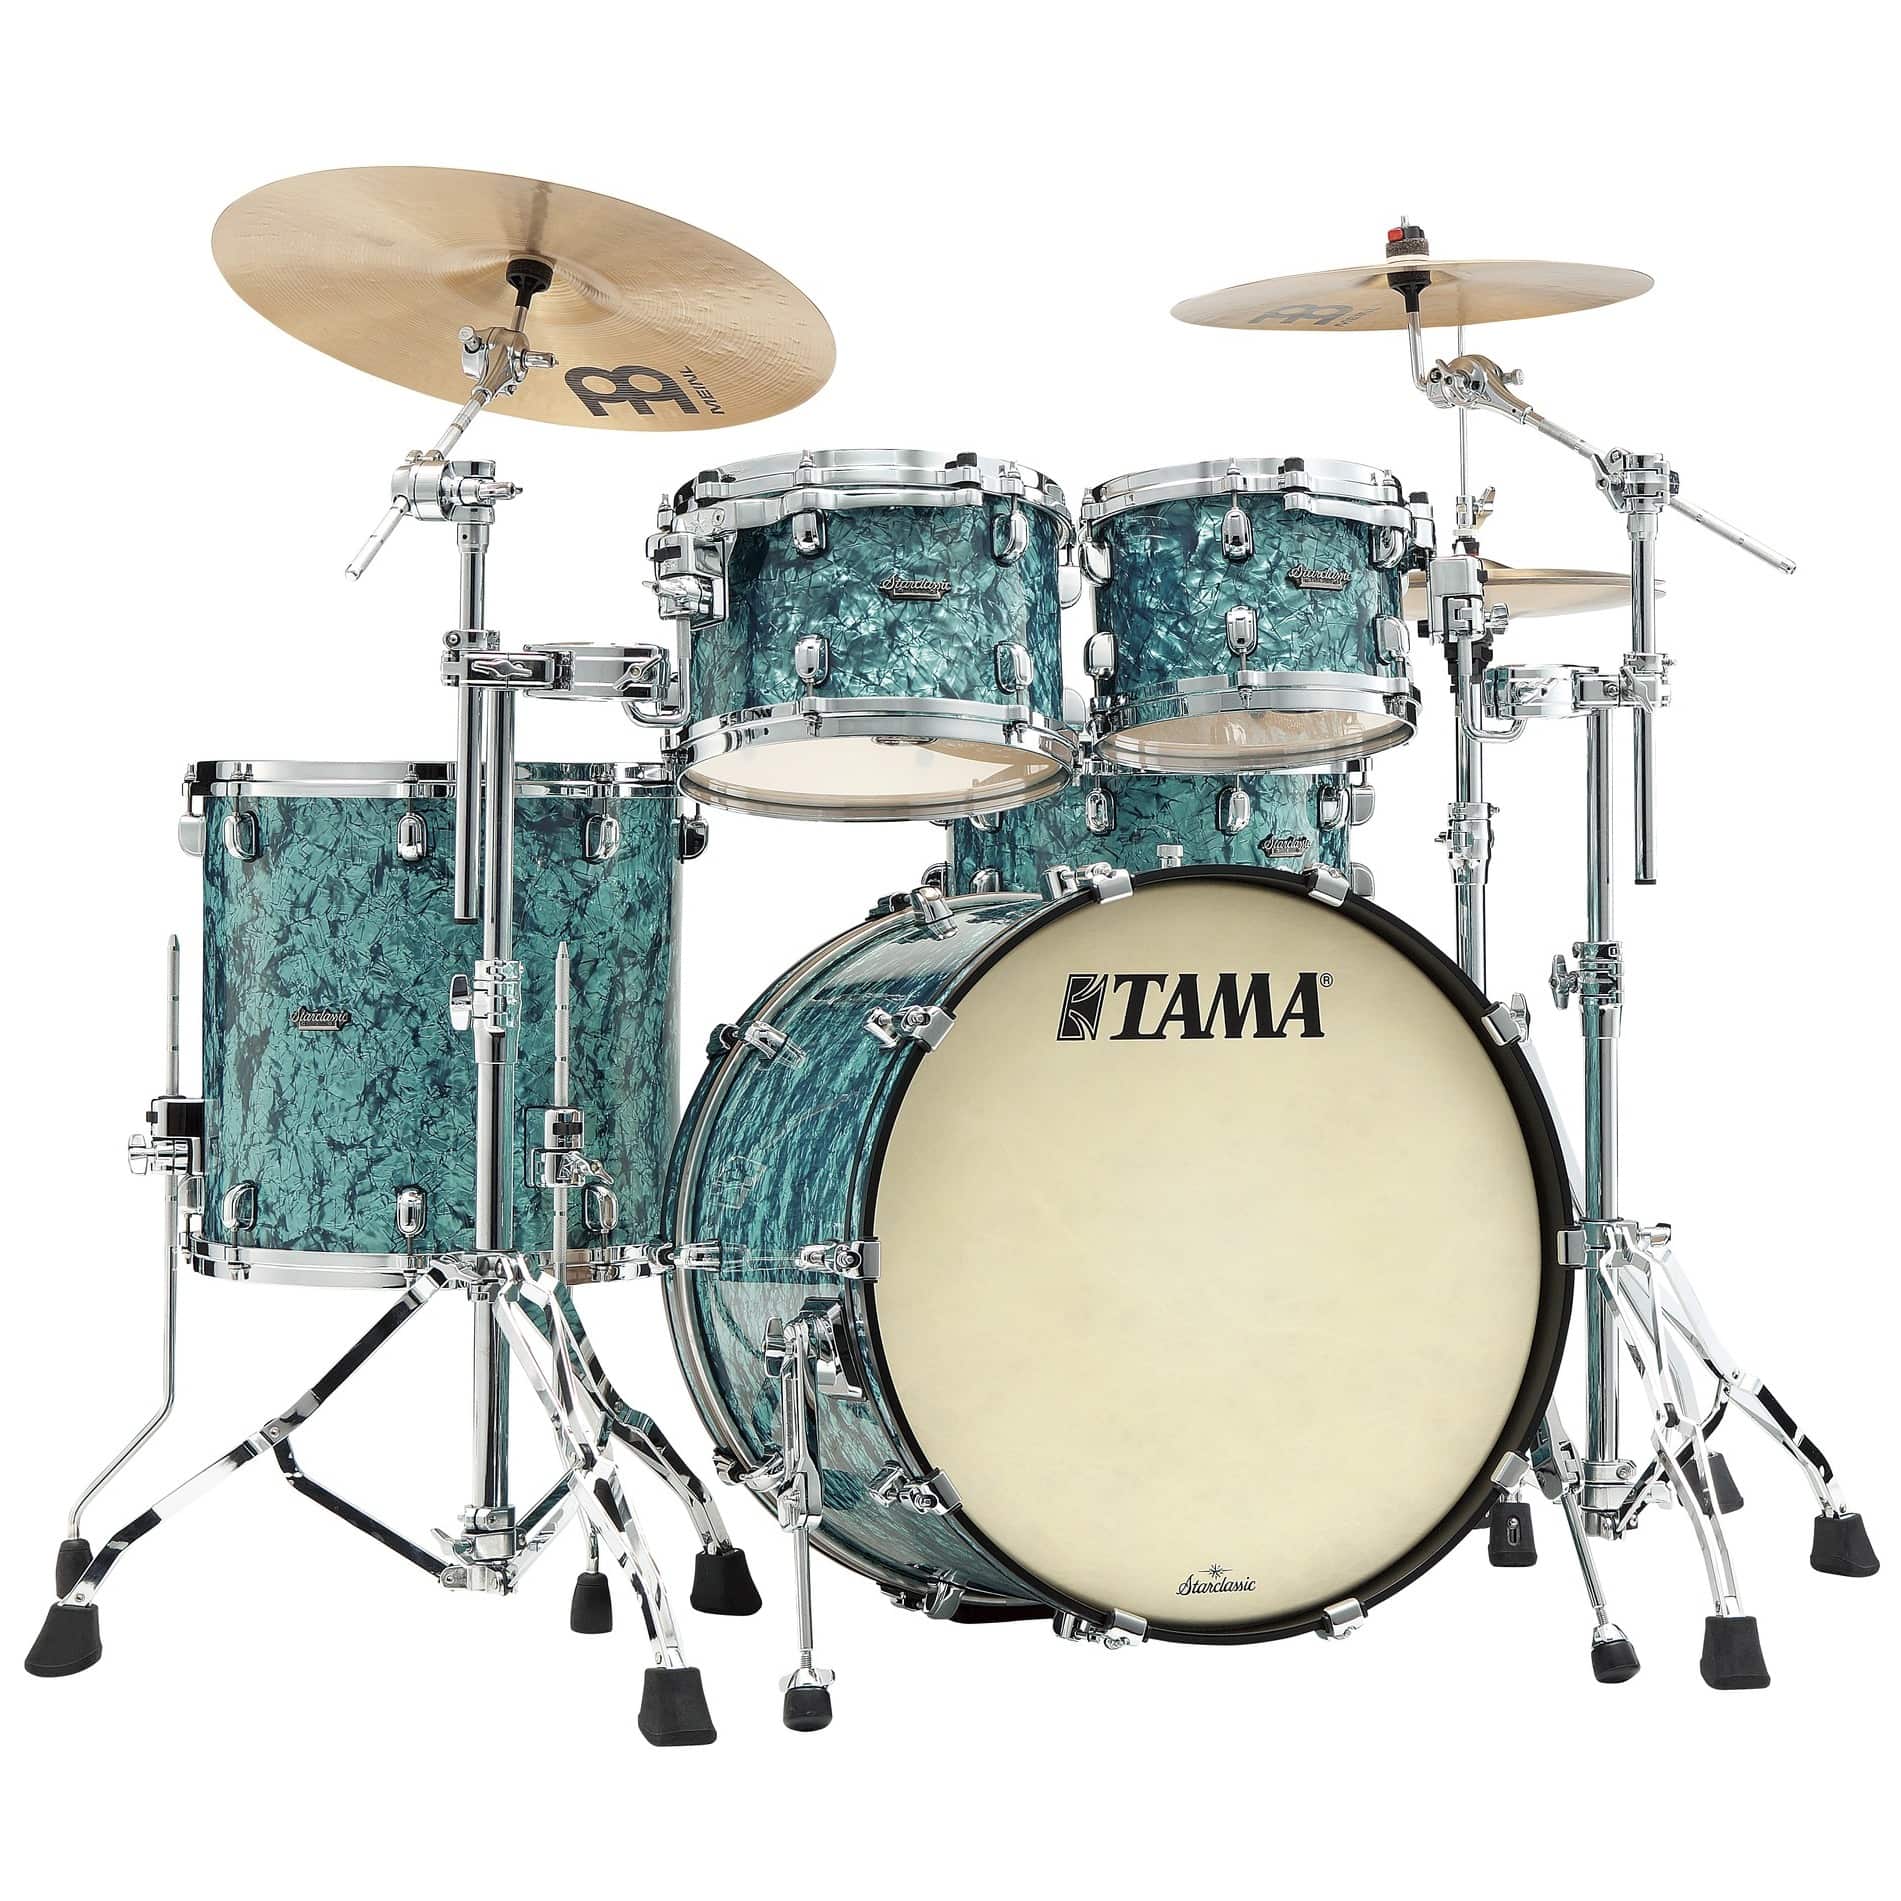 Tama MR42TZS-TQP Starclassic Maple Shell Kit 4 teilig - Turquoise Pearl/Chrom Hardware